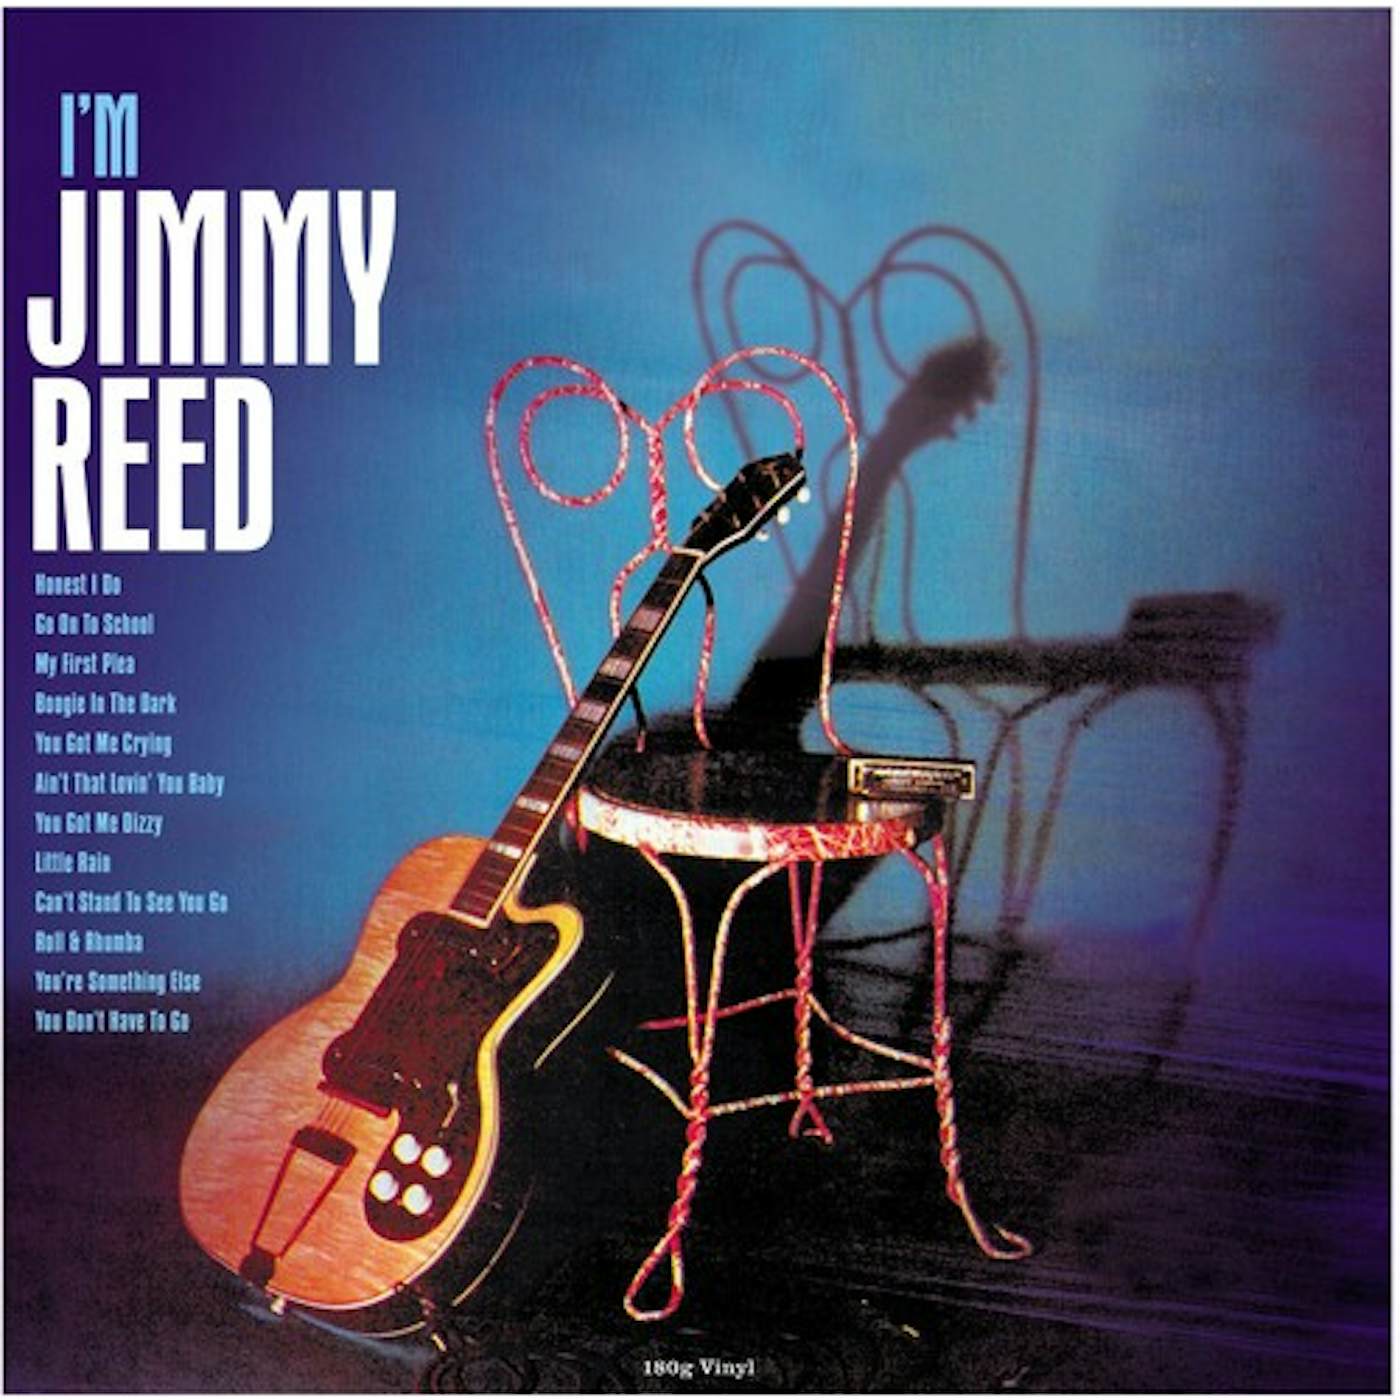 I'm Jimmy Reed Vinyl Record